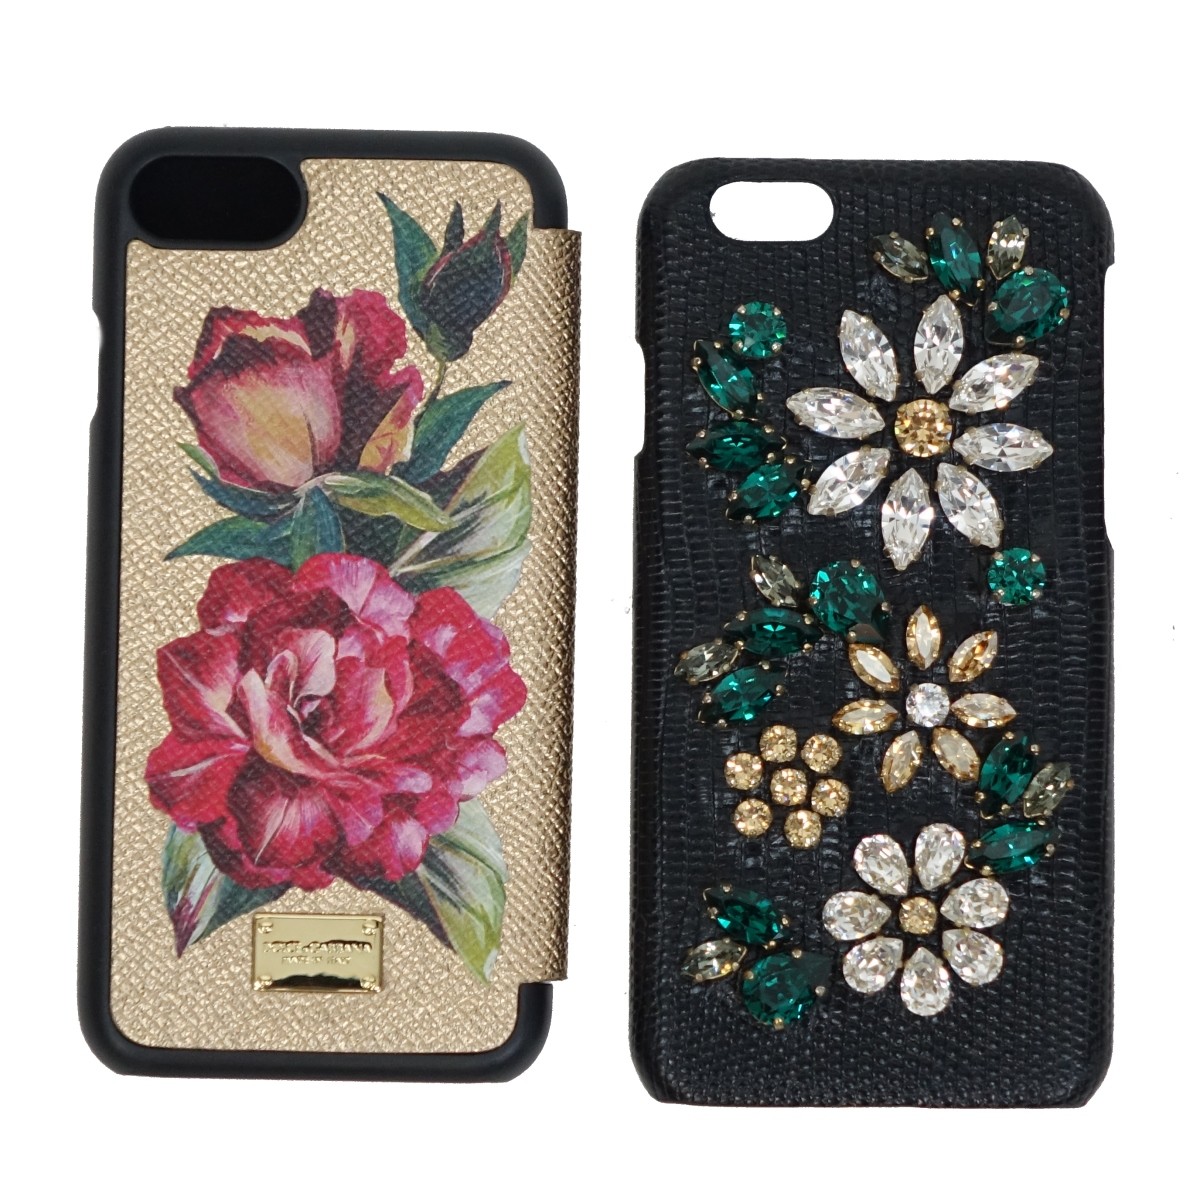 Dolce & Gabbana Iphone 6 Cases